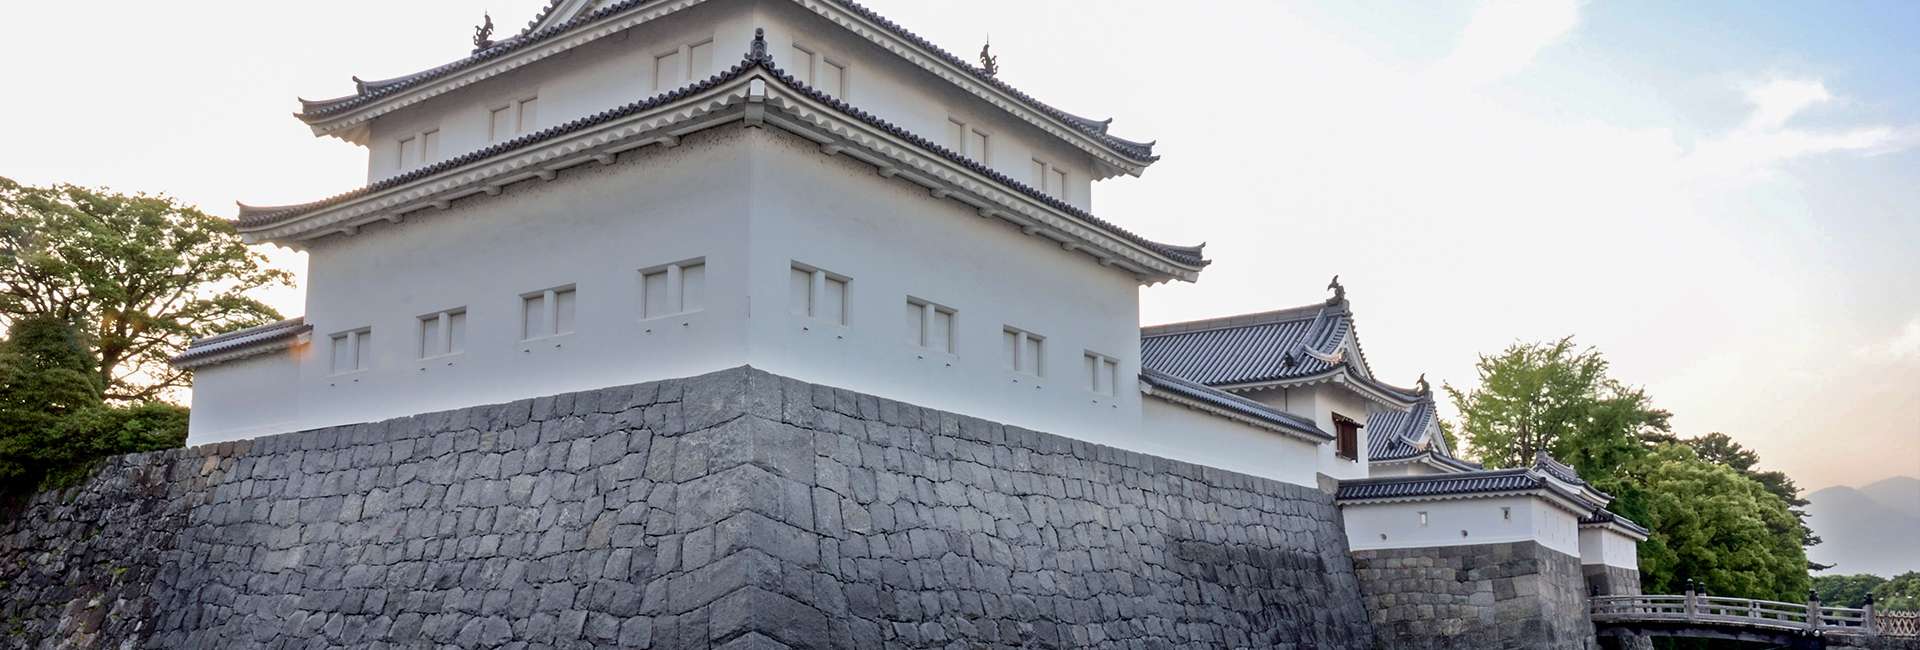 Sumpu Castle in Shizuoka